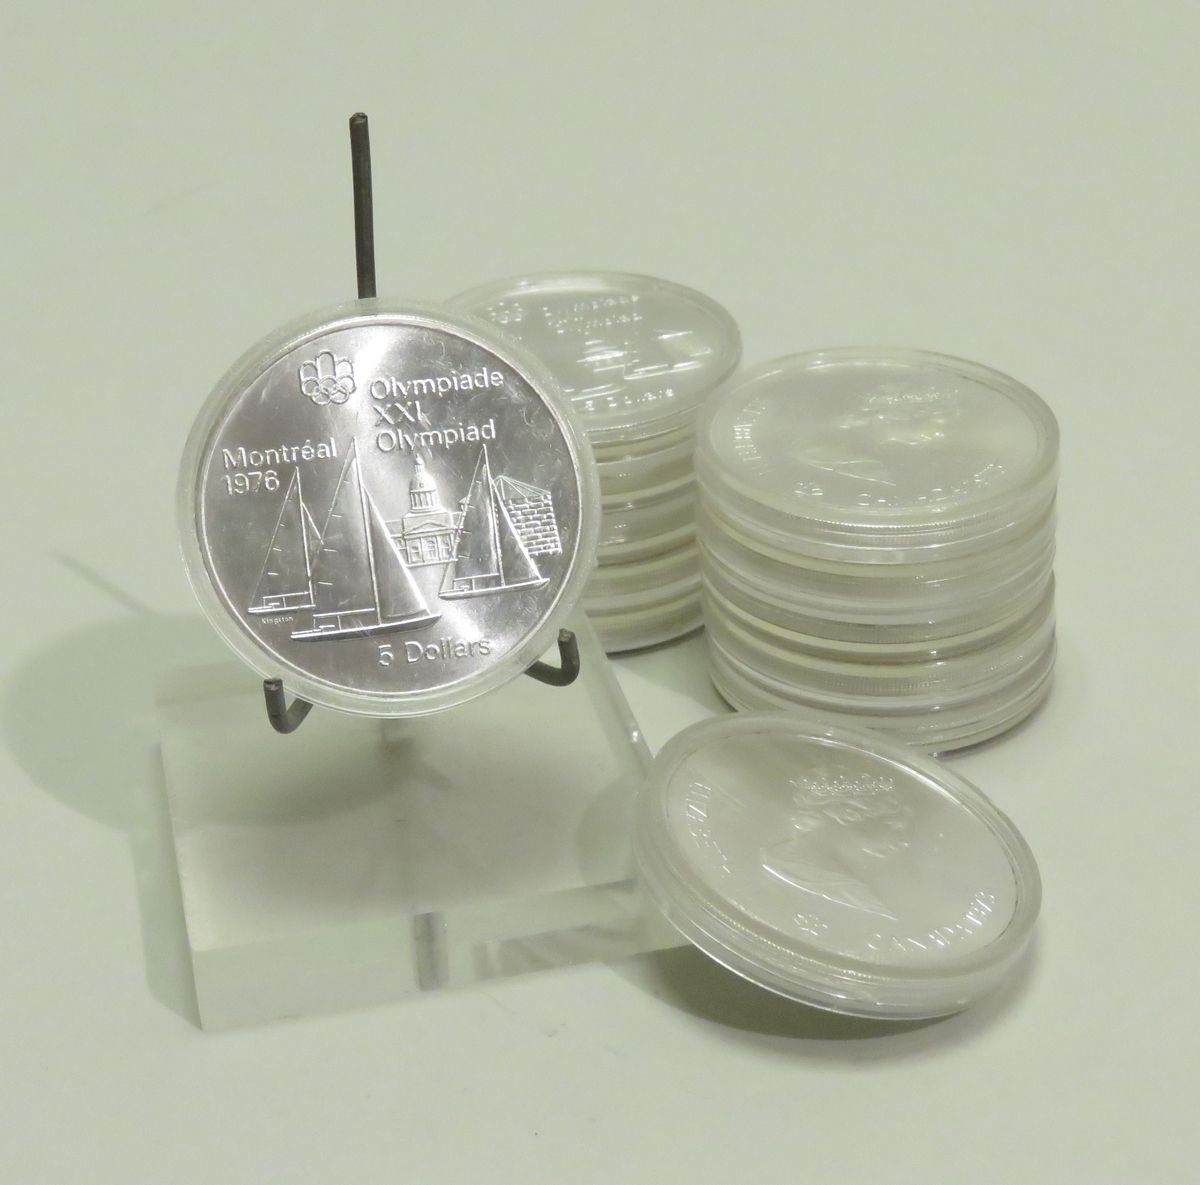 Null 一套12枚 "蒙特利尔-奥林匹克 "银质5美元硬币。FDC。 直径：38毫米（不包括压花）。